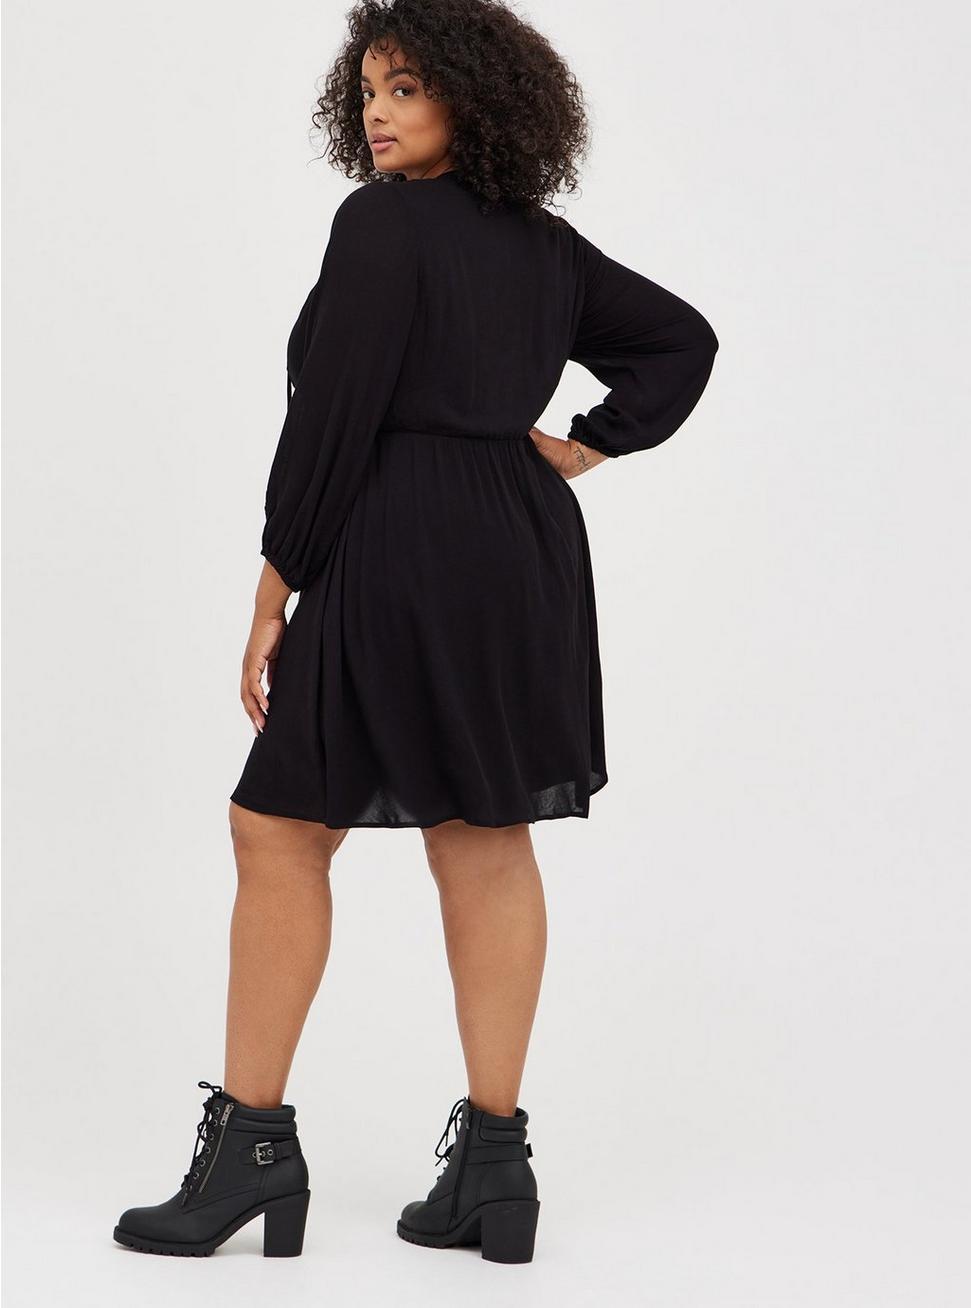 Plus Size - Skater Dress - Embroidered Gauze Black - Torrid